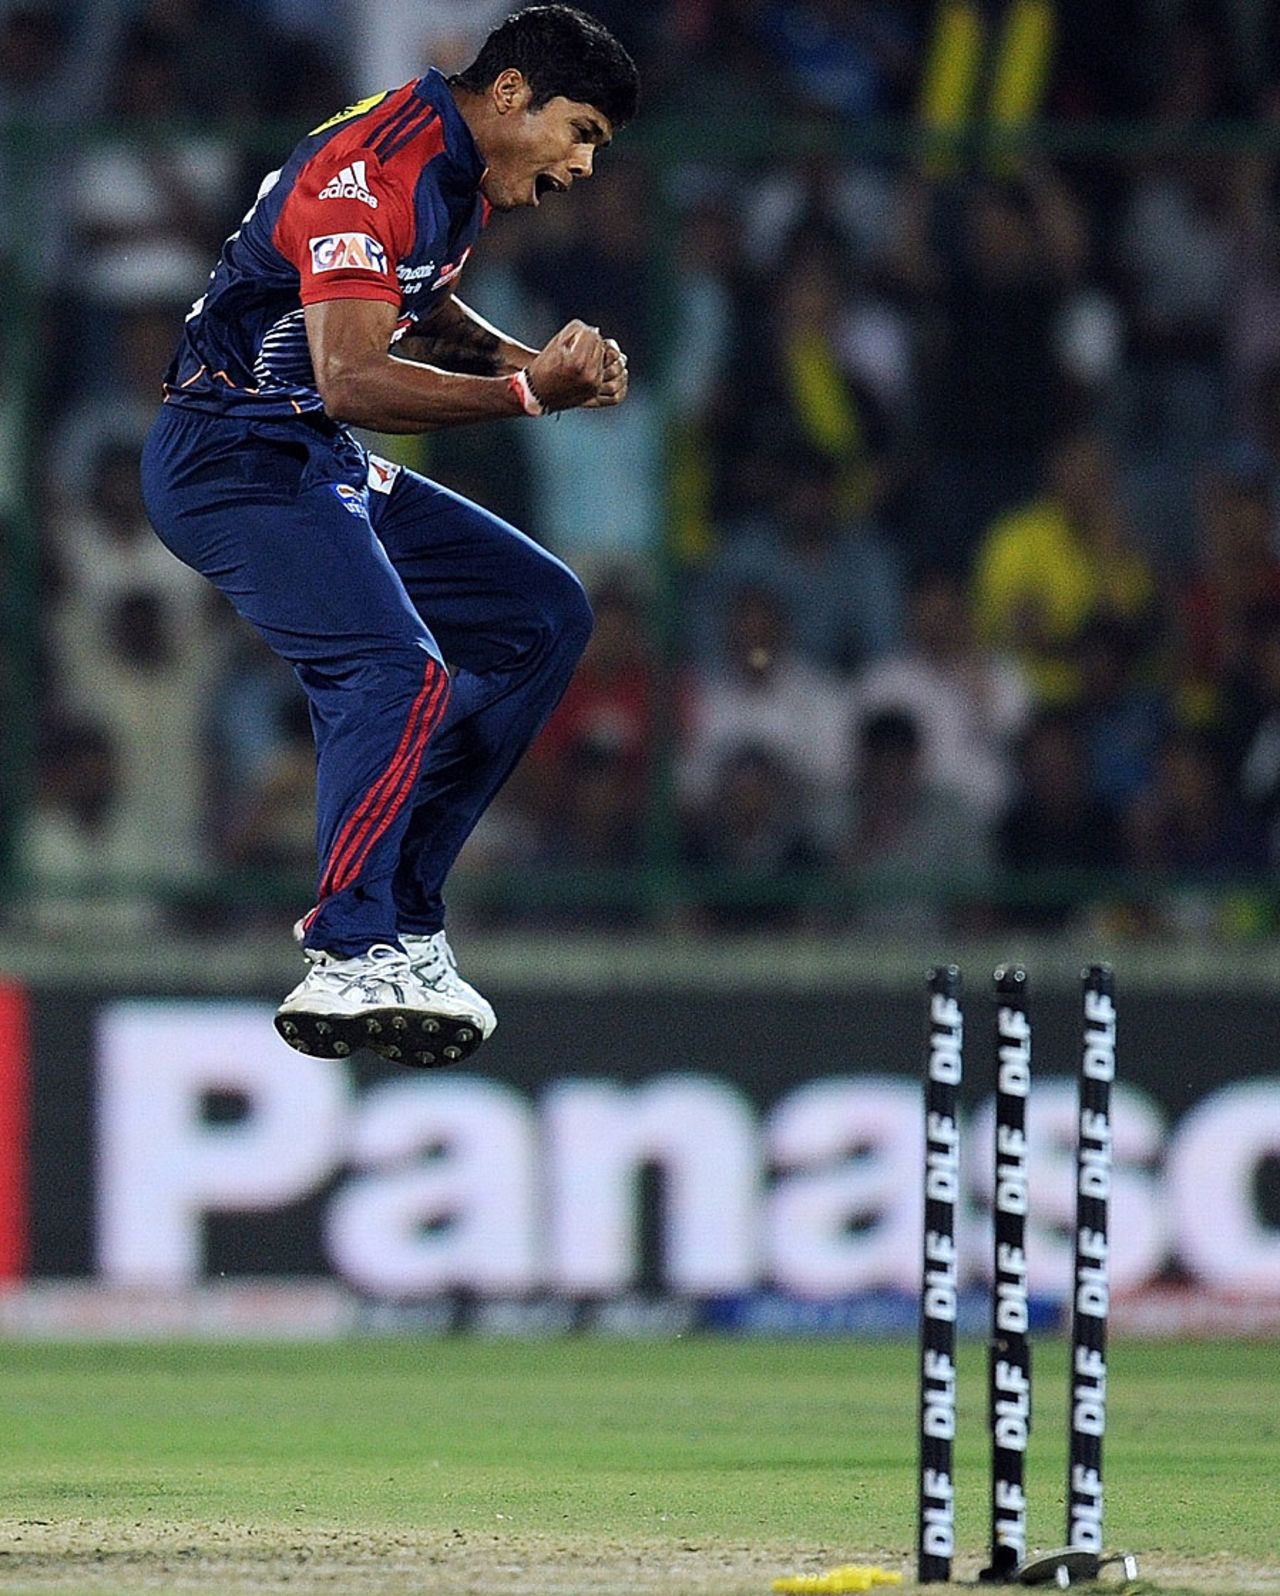 Umesh Yadav is delighted after bowling Dwayne Bravo, Delhi Daredevils v Chennai Super Kings, IPL 2012, Delhi, April 10, 2012